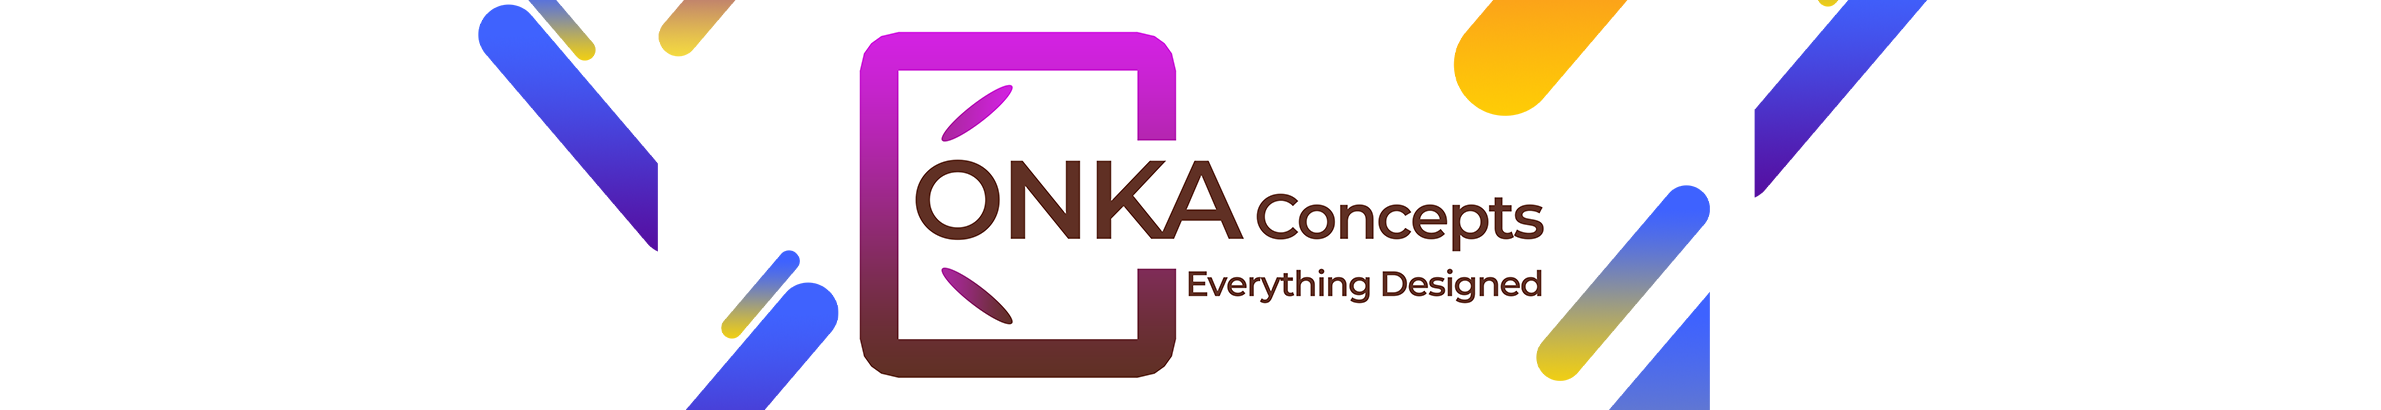 ONKA CONCEPTS profil başlığı